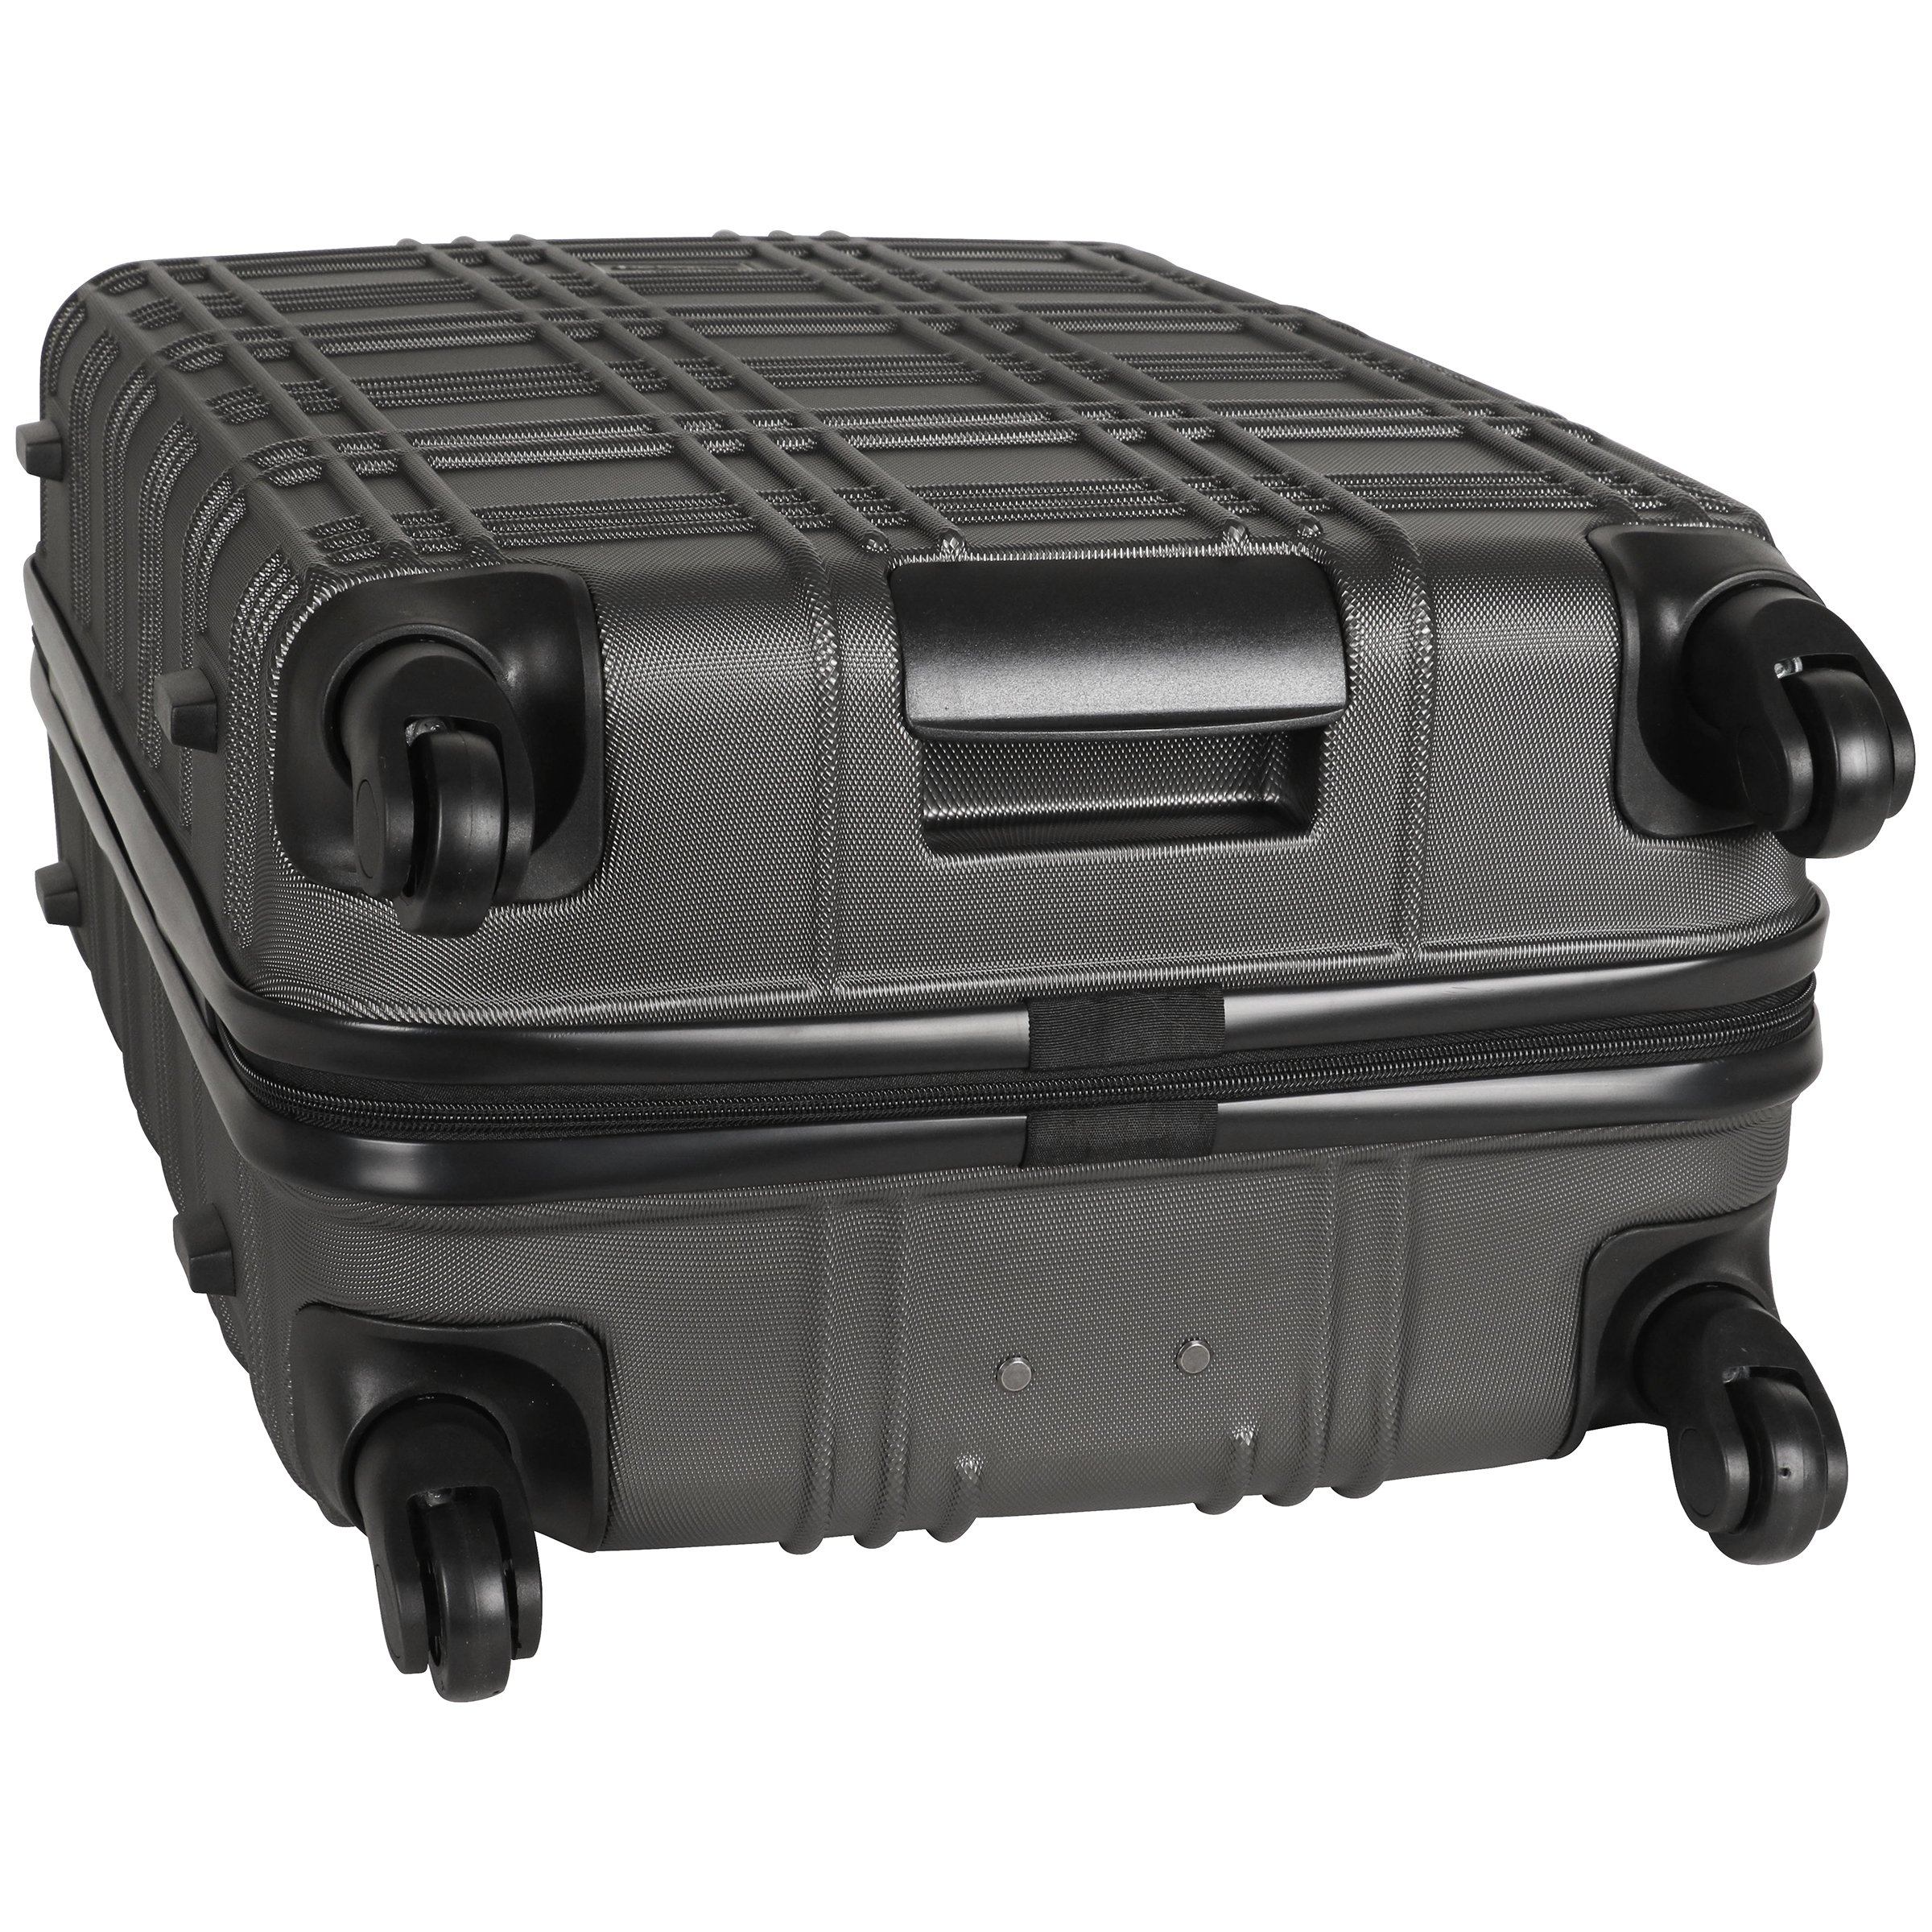 Ben Sherman Nottingham Lightweight Hardside 4-Wheel Spinner Travel Luggage, Charcoal, 24-inch Checked